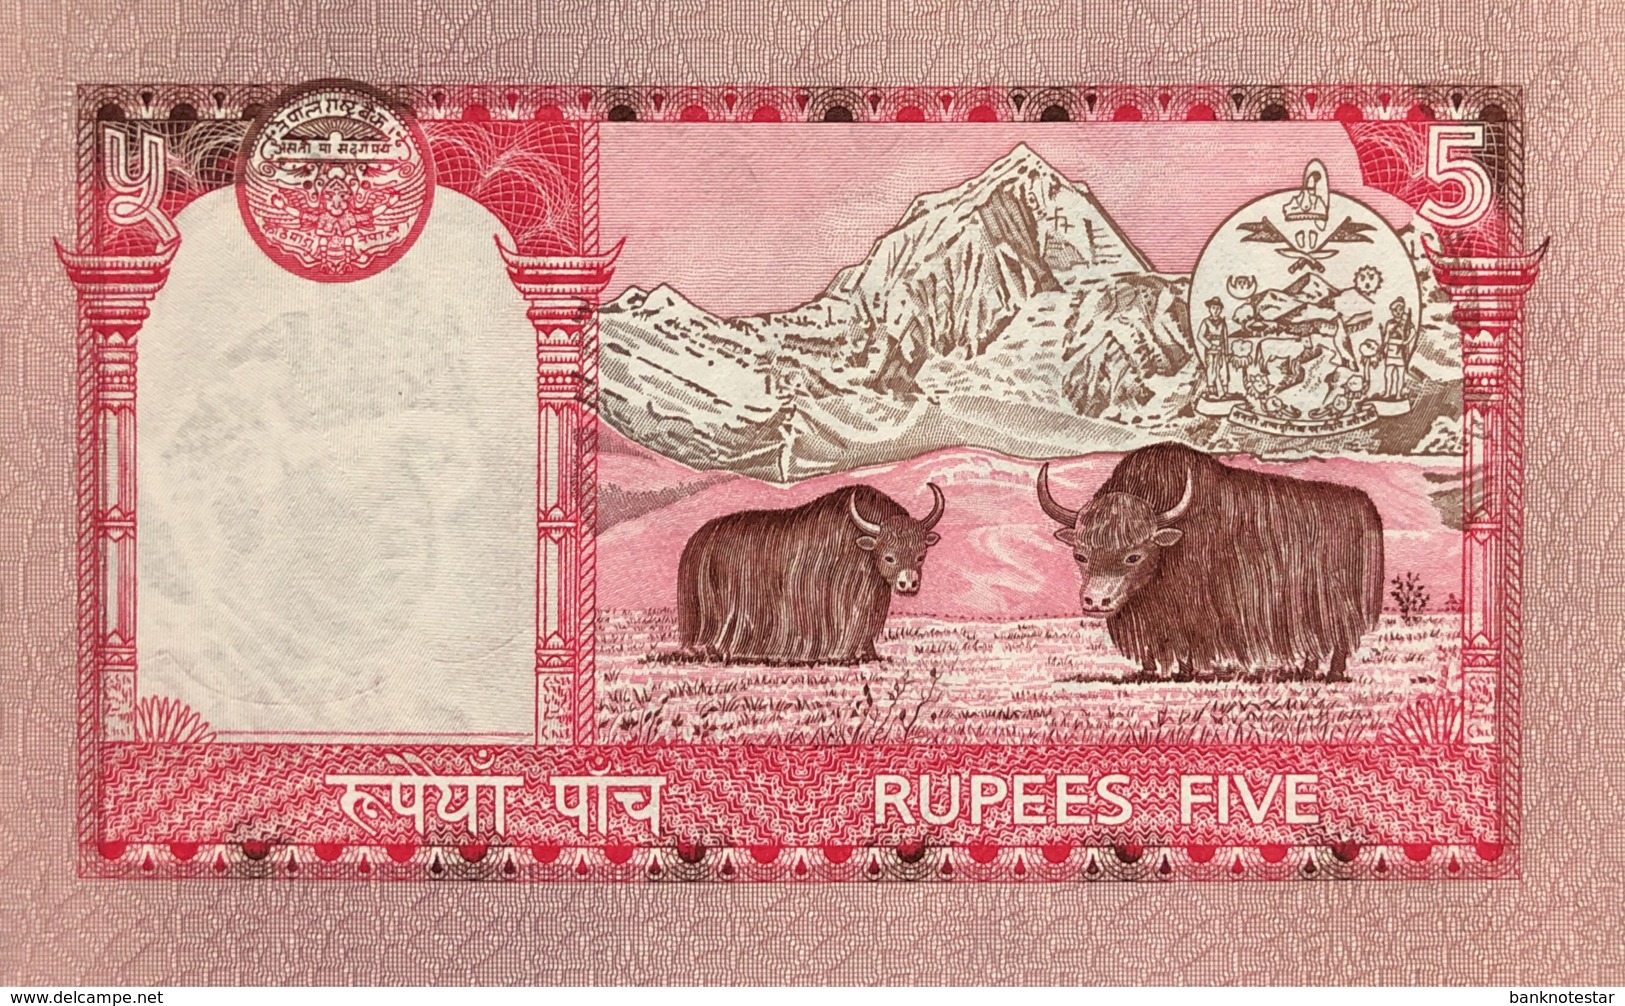 Nepal 5 Rupees, P-53 (2005) - UNC - Nepal